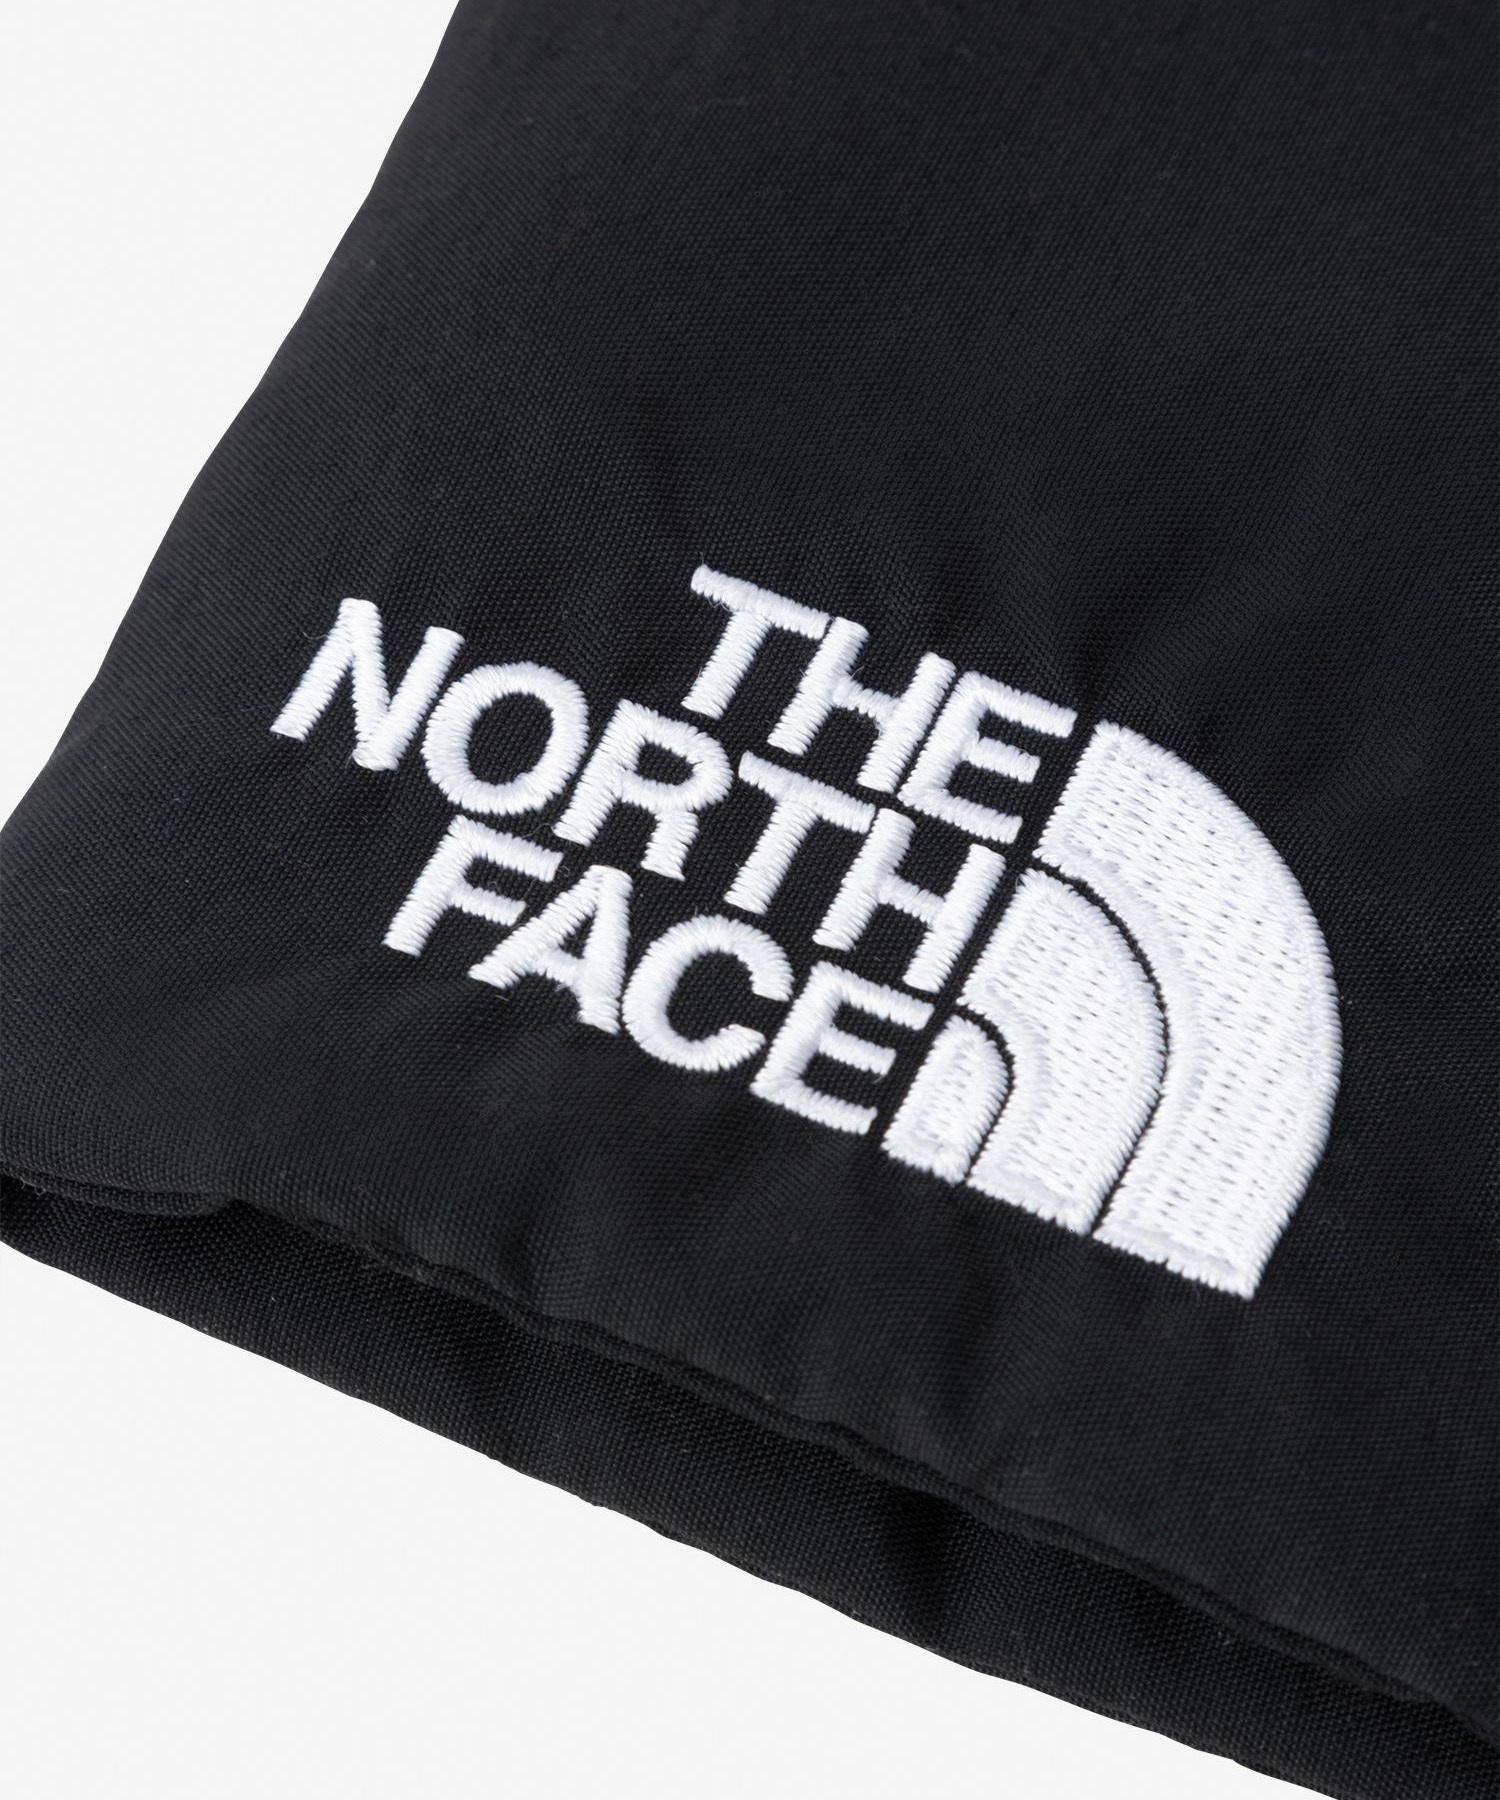 THE NORTH FACE/ザ・ノース・フェイス Kids’ Camp-bell Fleece Muffler キャンベルフリースマフラー キッズ ブラック NNJ72104 K(K-FREE)